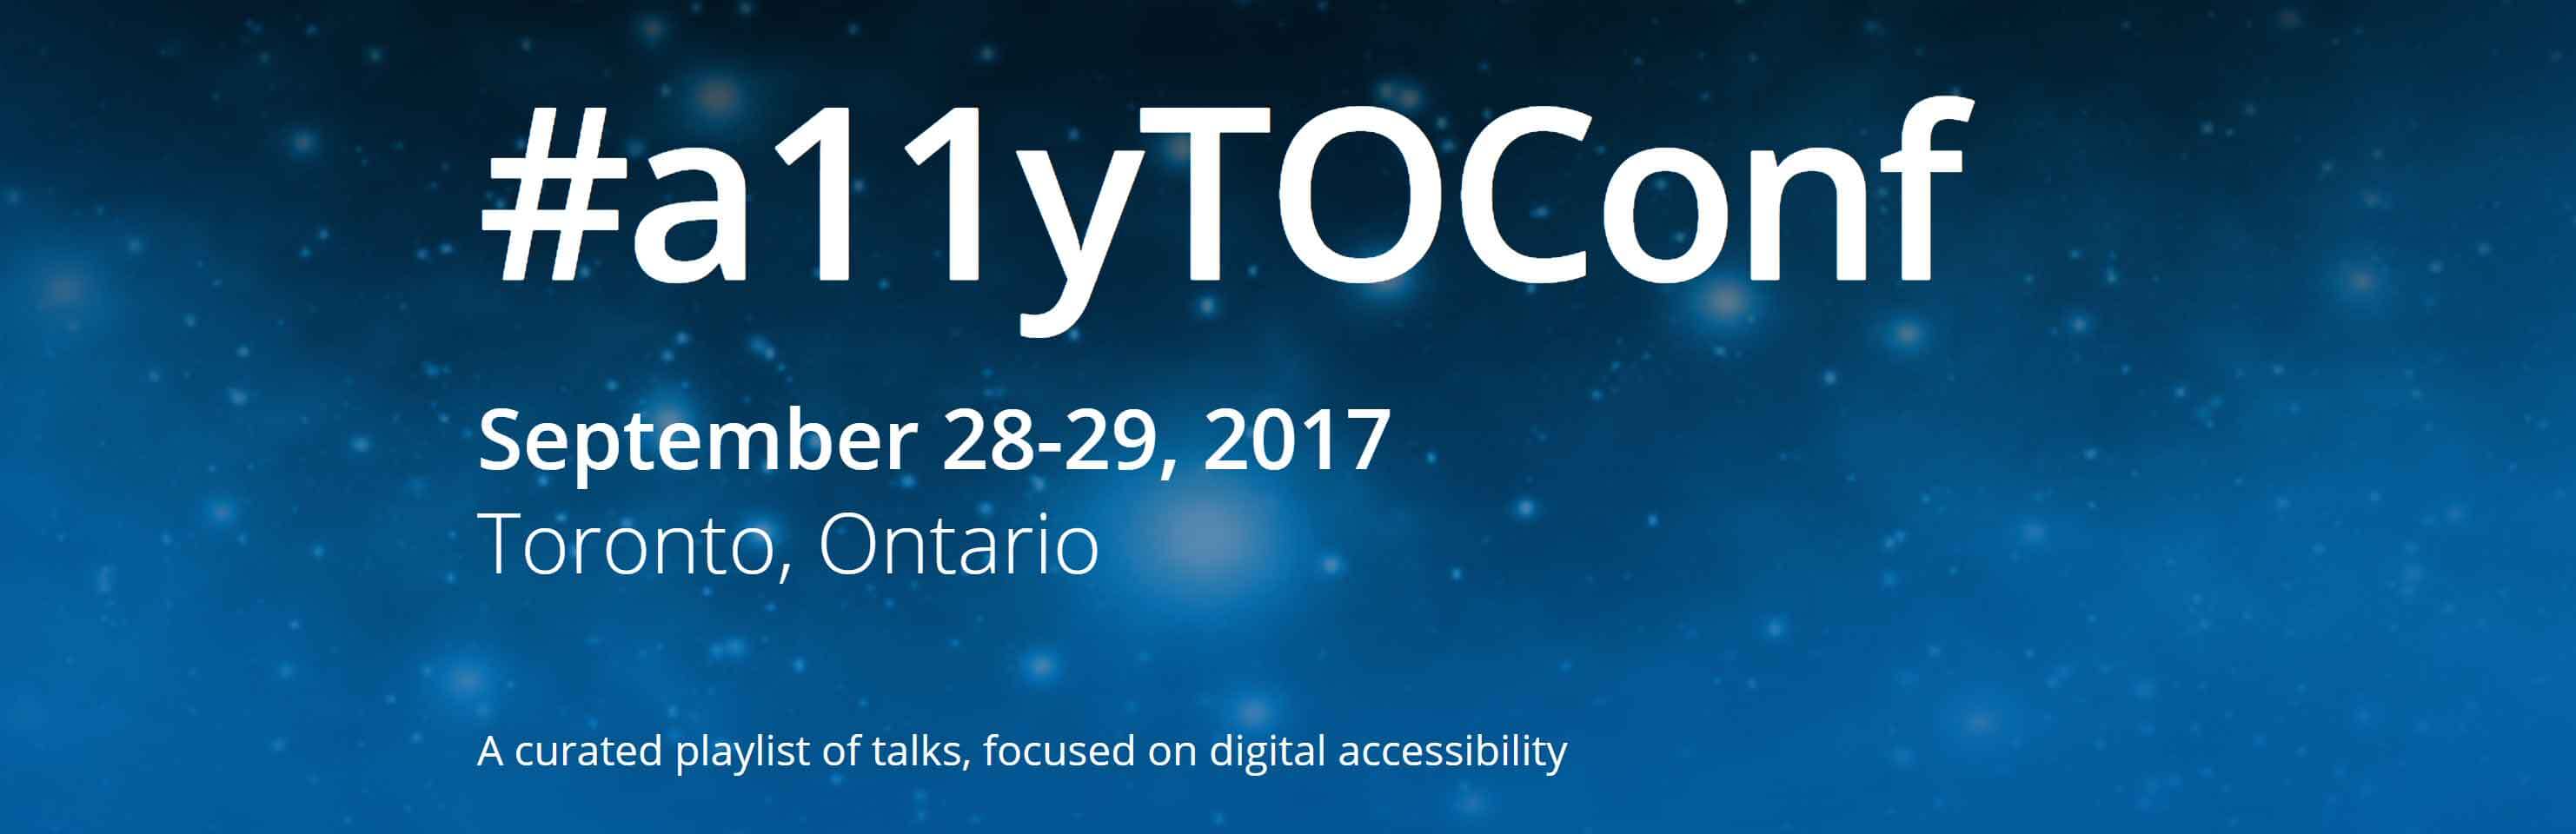 #a11yTOConf , September 28-29, 2017, Toronto, Ontario